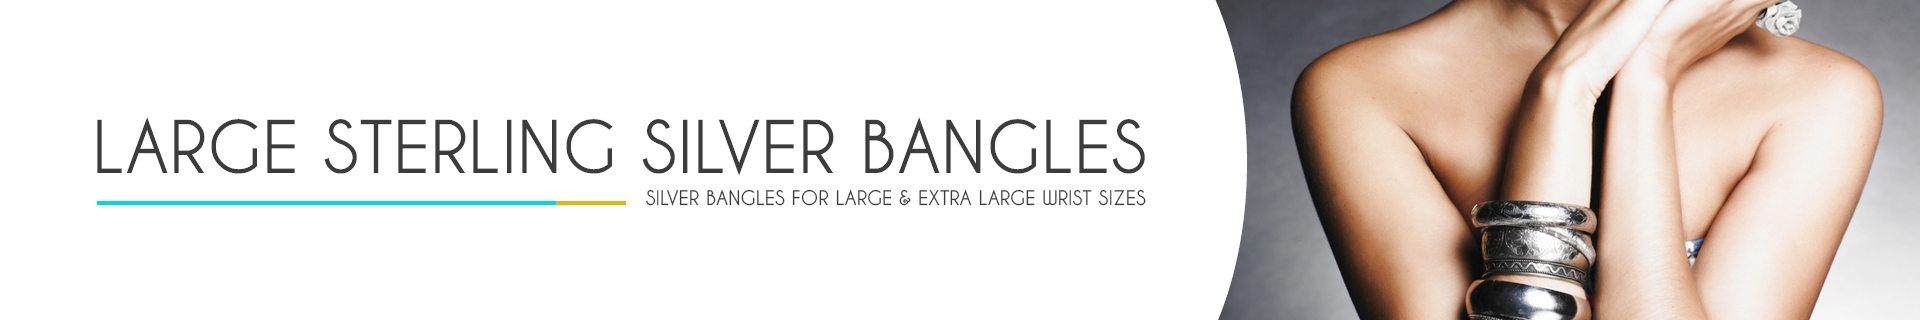  Large Ladies Silver Bangles 